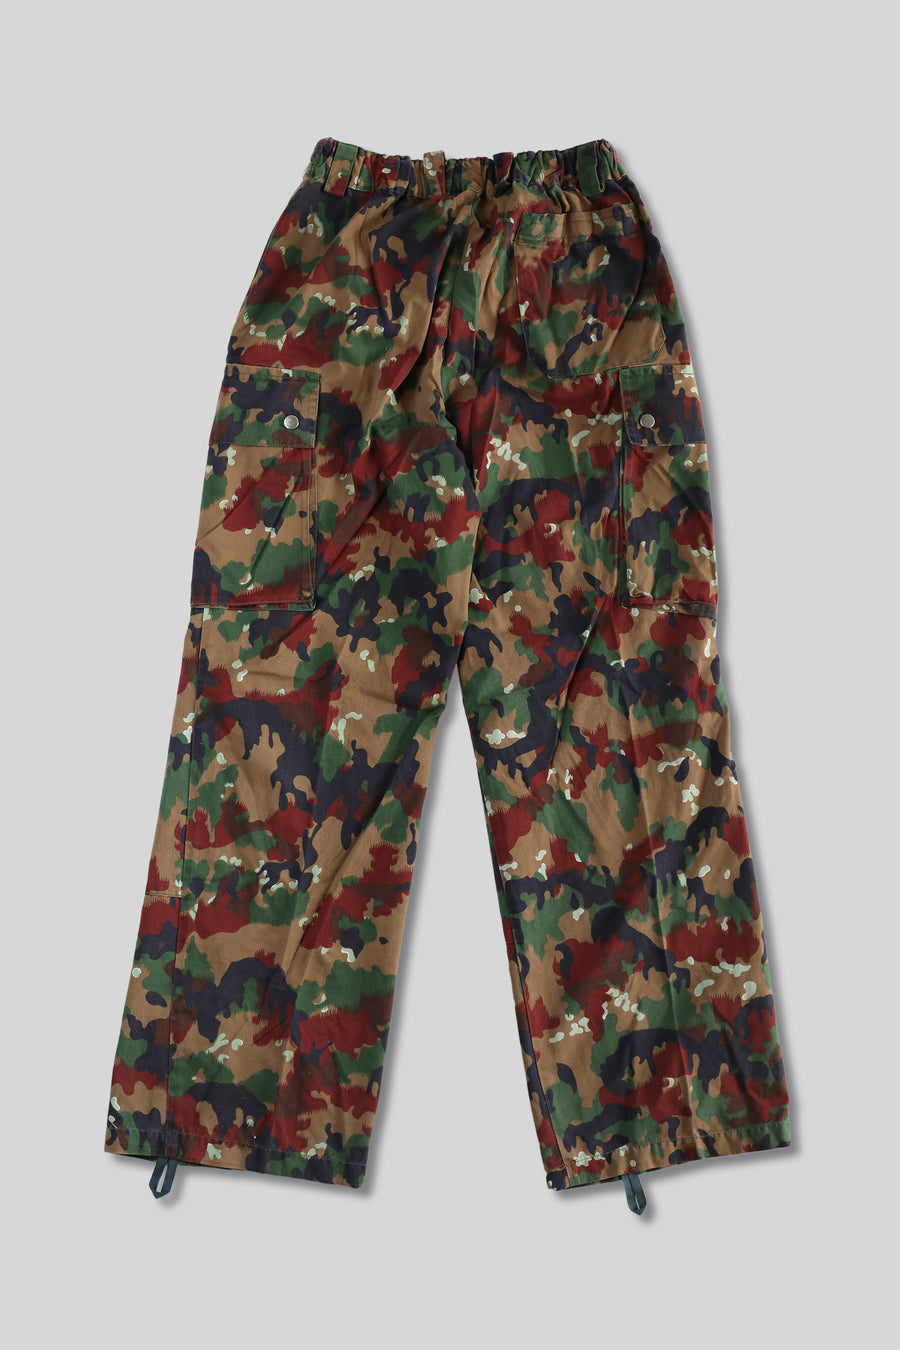 Vintage Bright Camo Army Pants